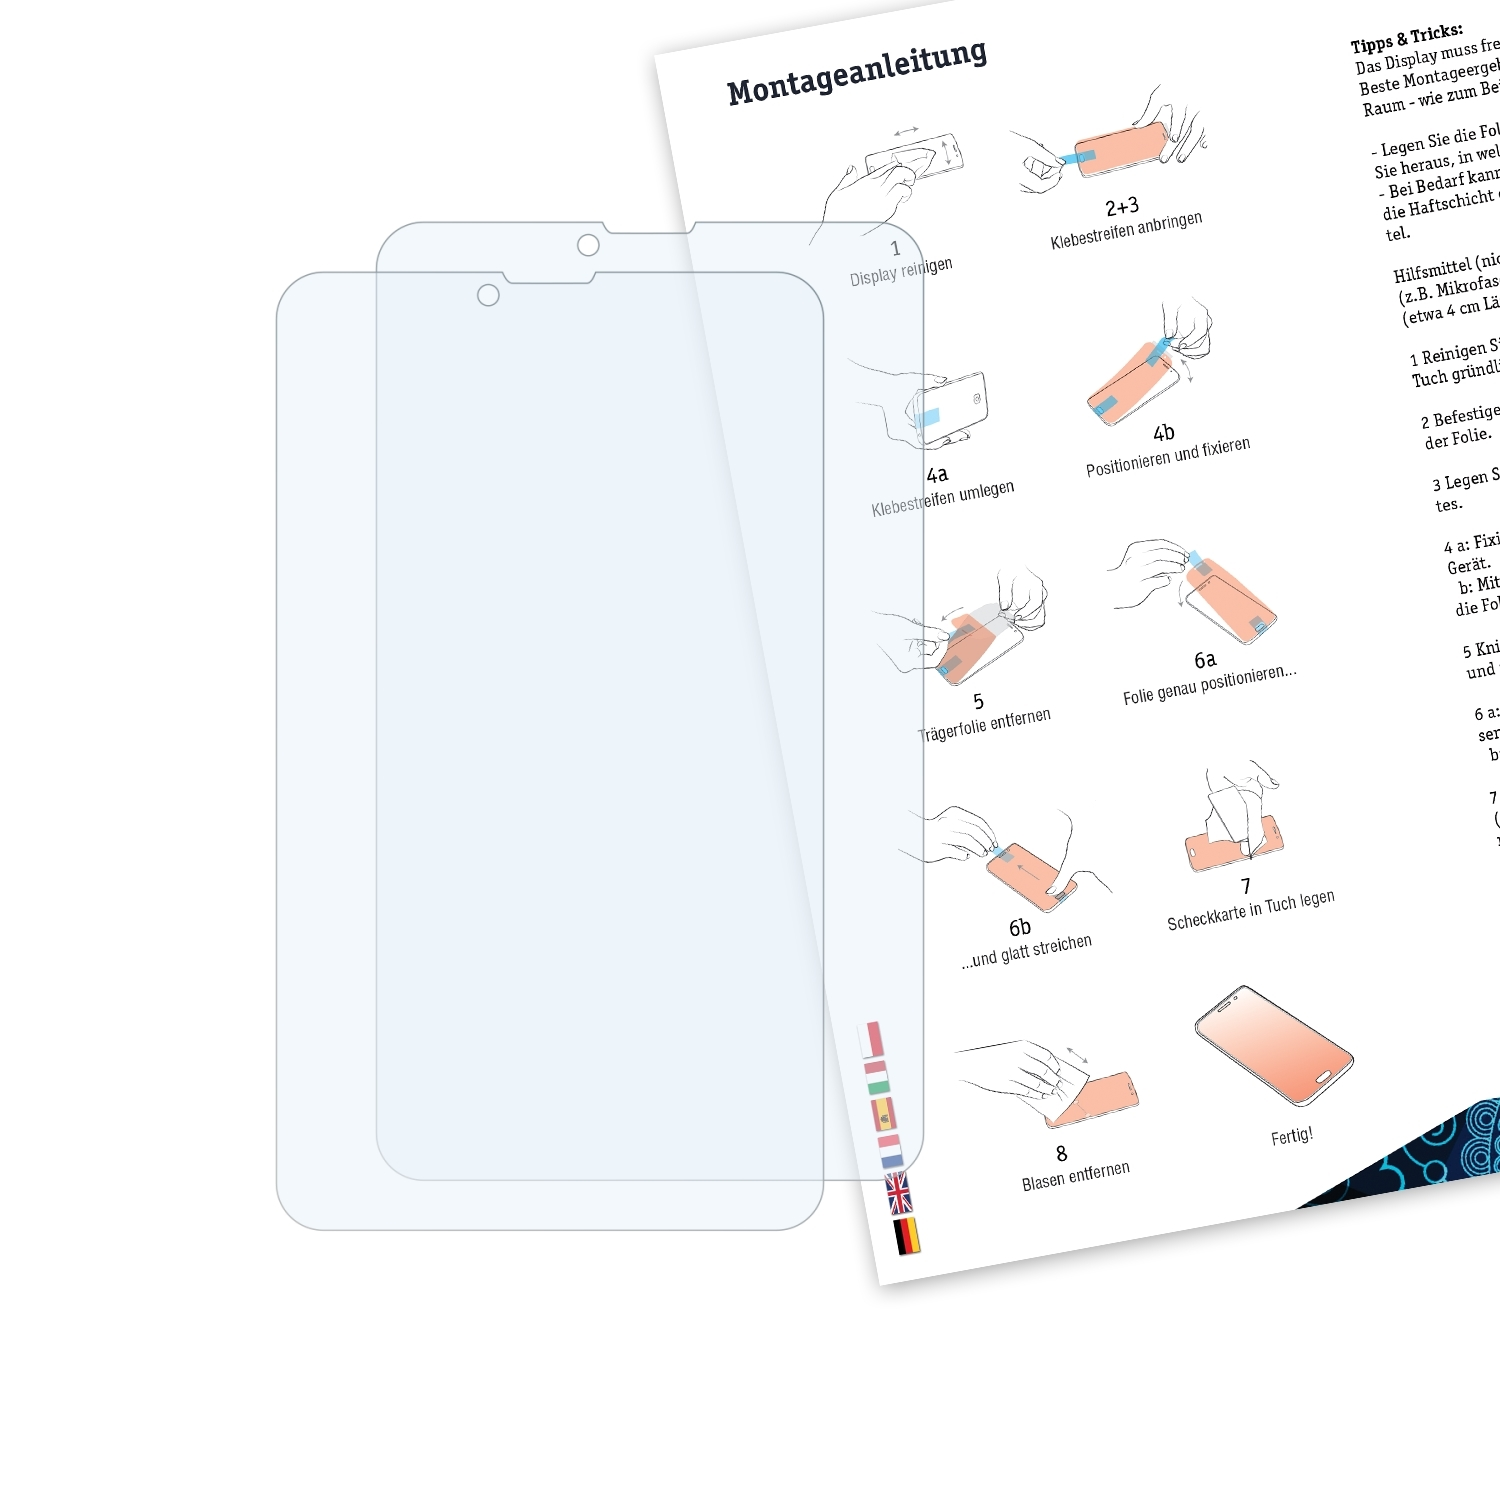 SmartPad 7) Schutzfolie(für Mediacom Mx Basics-Clear 2x BRUNI